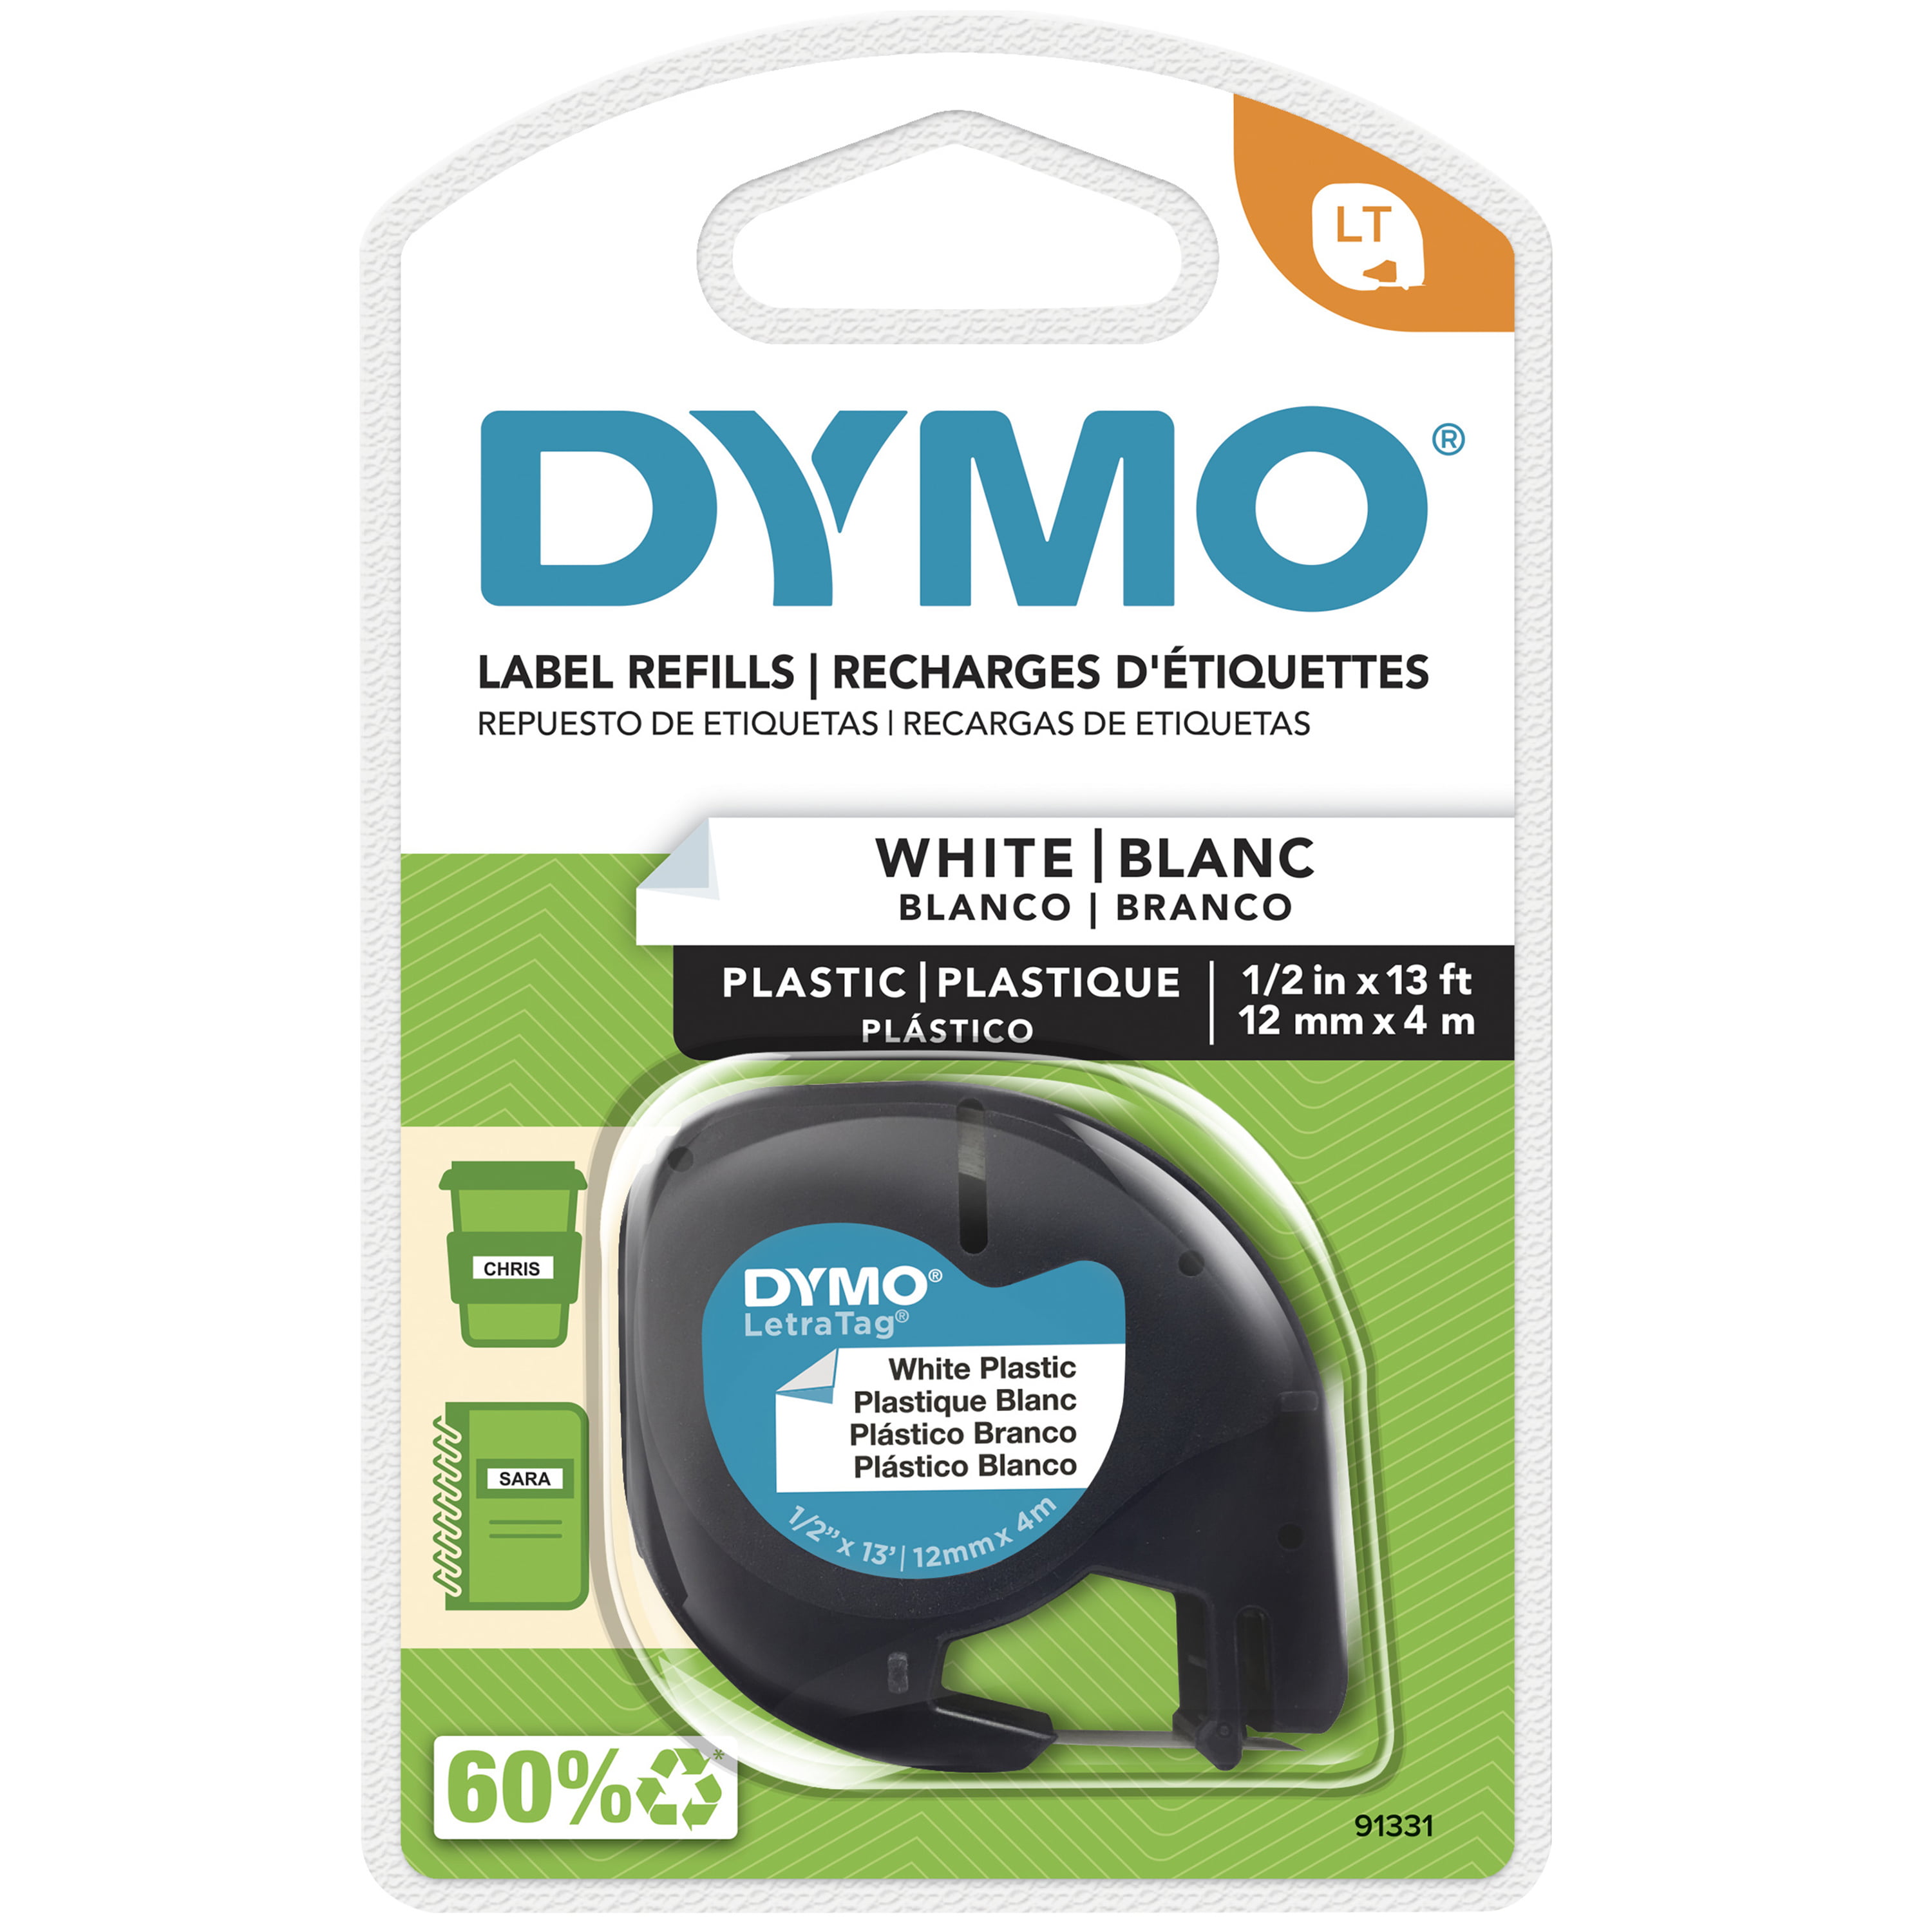 Dymo DYM18483 Tape for sale online 